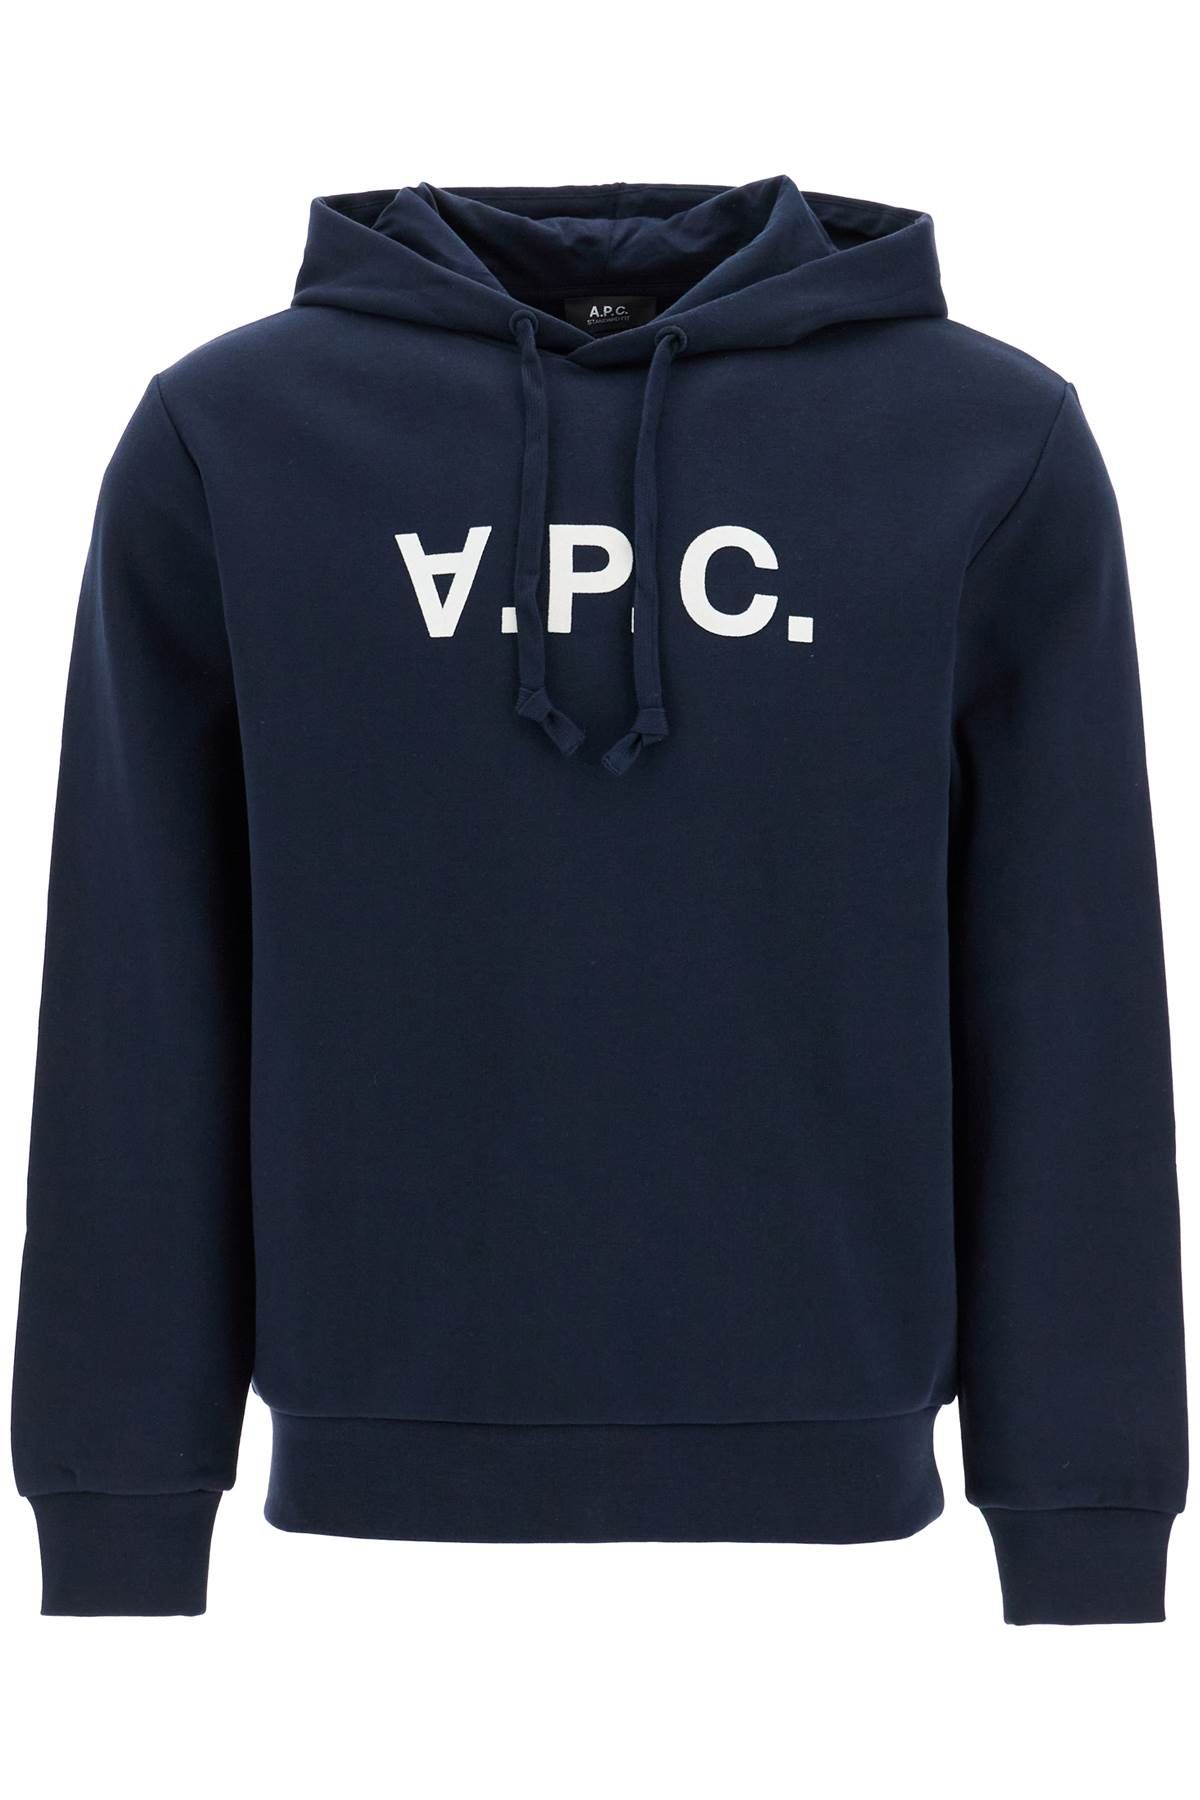 A.P.C. A. P.C. hooded sweatshirt grand v